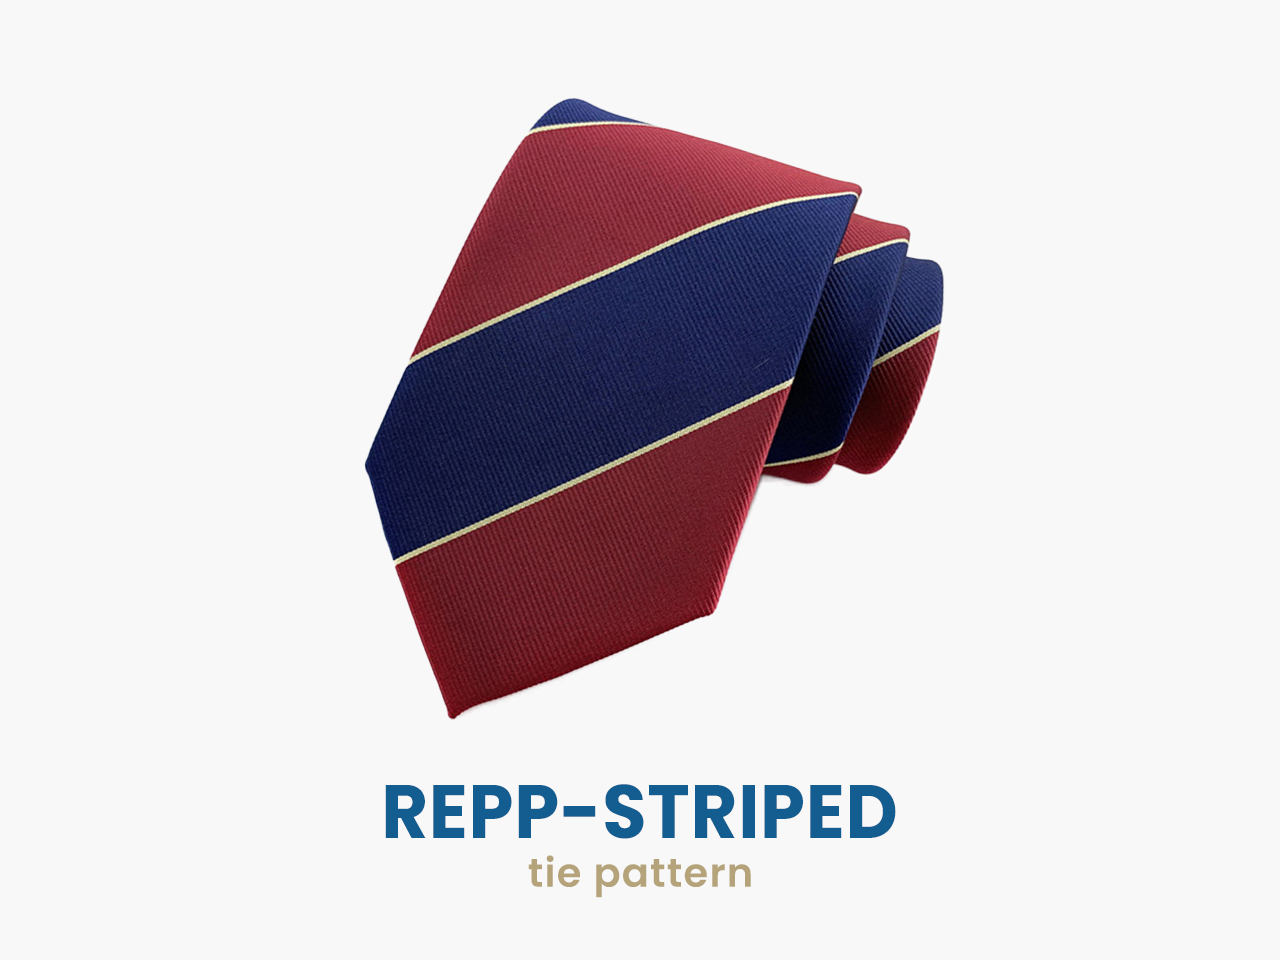 Repp-striped tie pattern